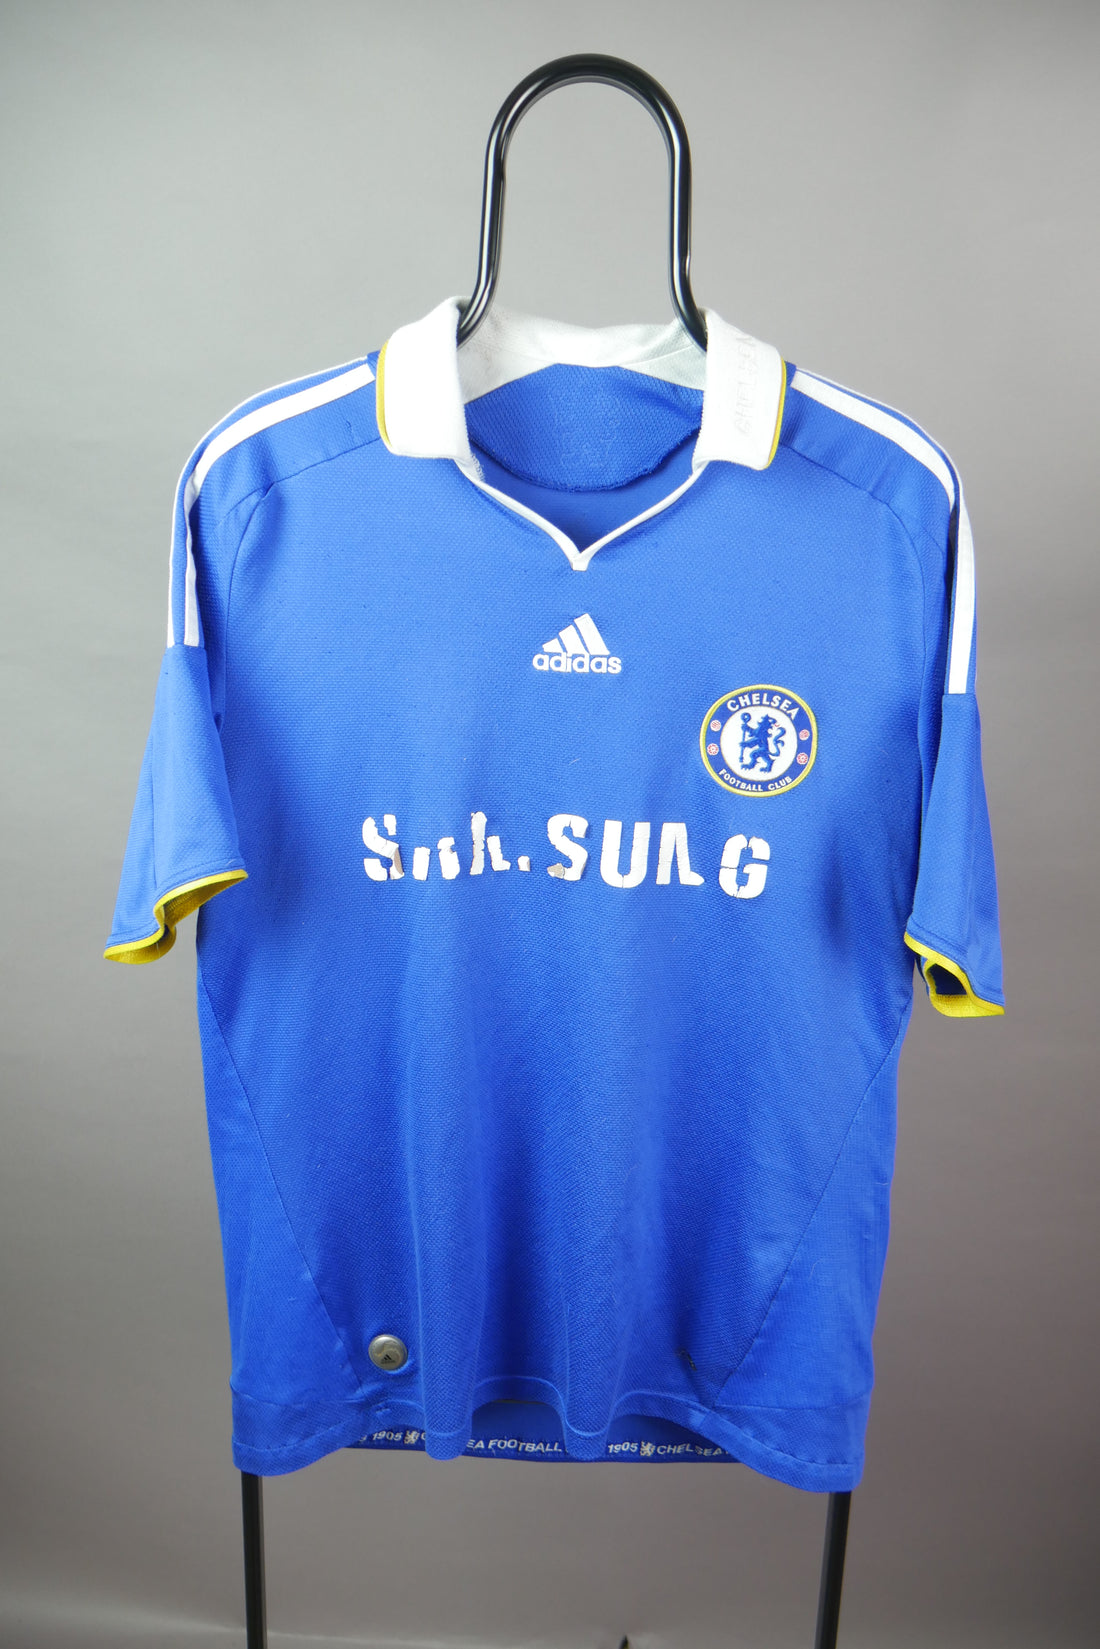 The Adidas Chelsea '08 Shirt (M)